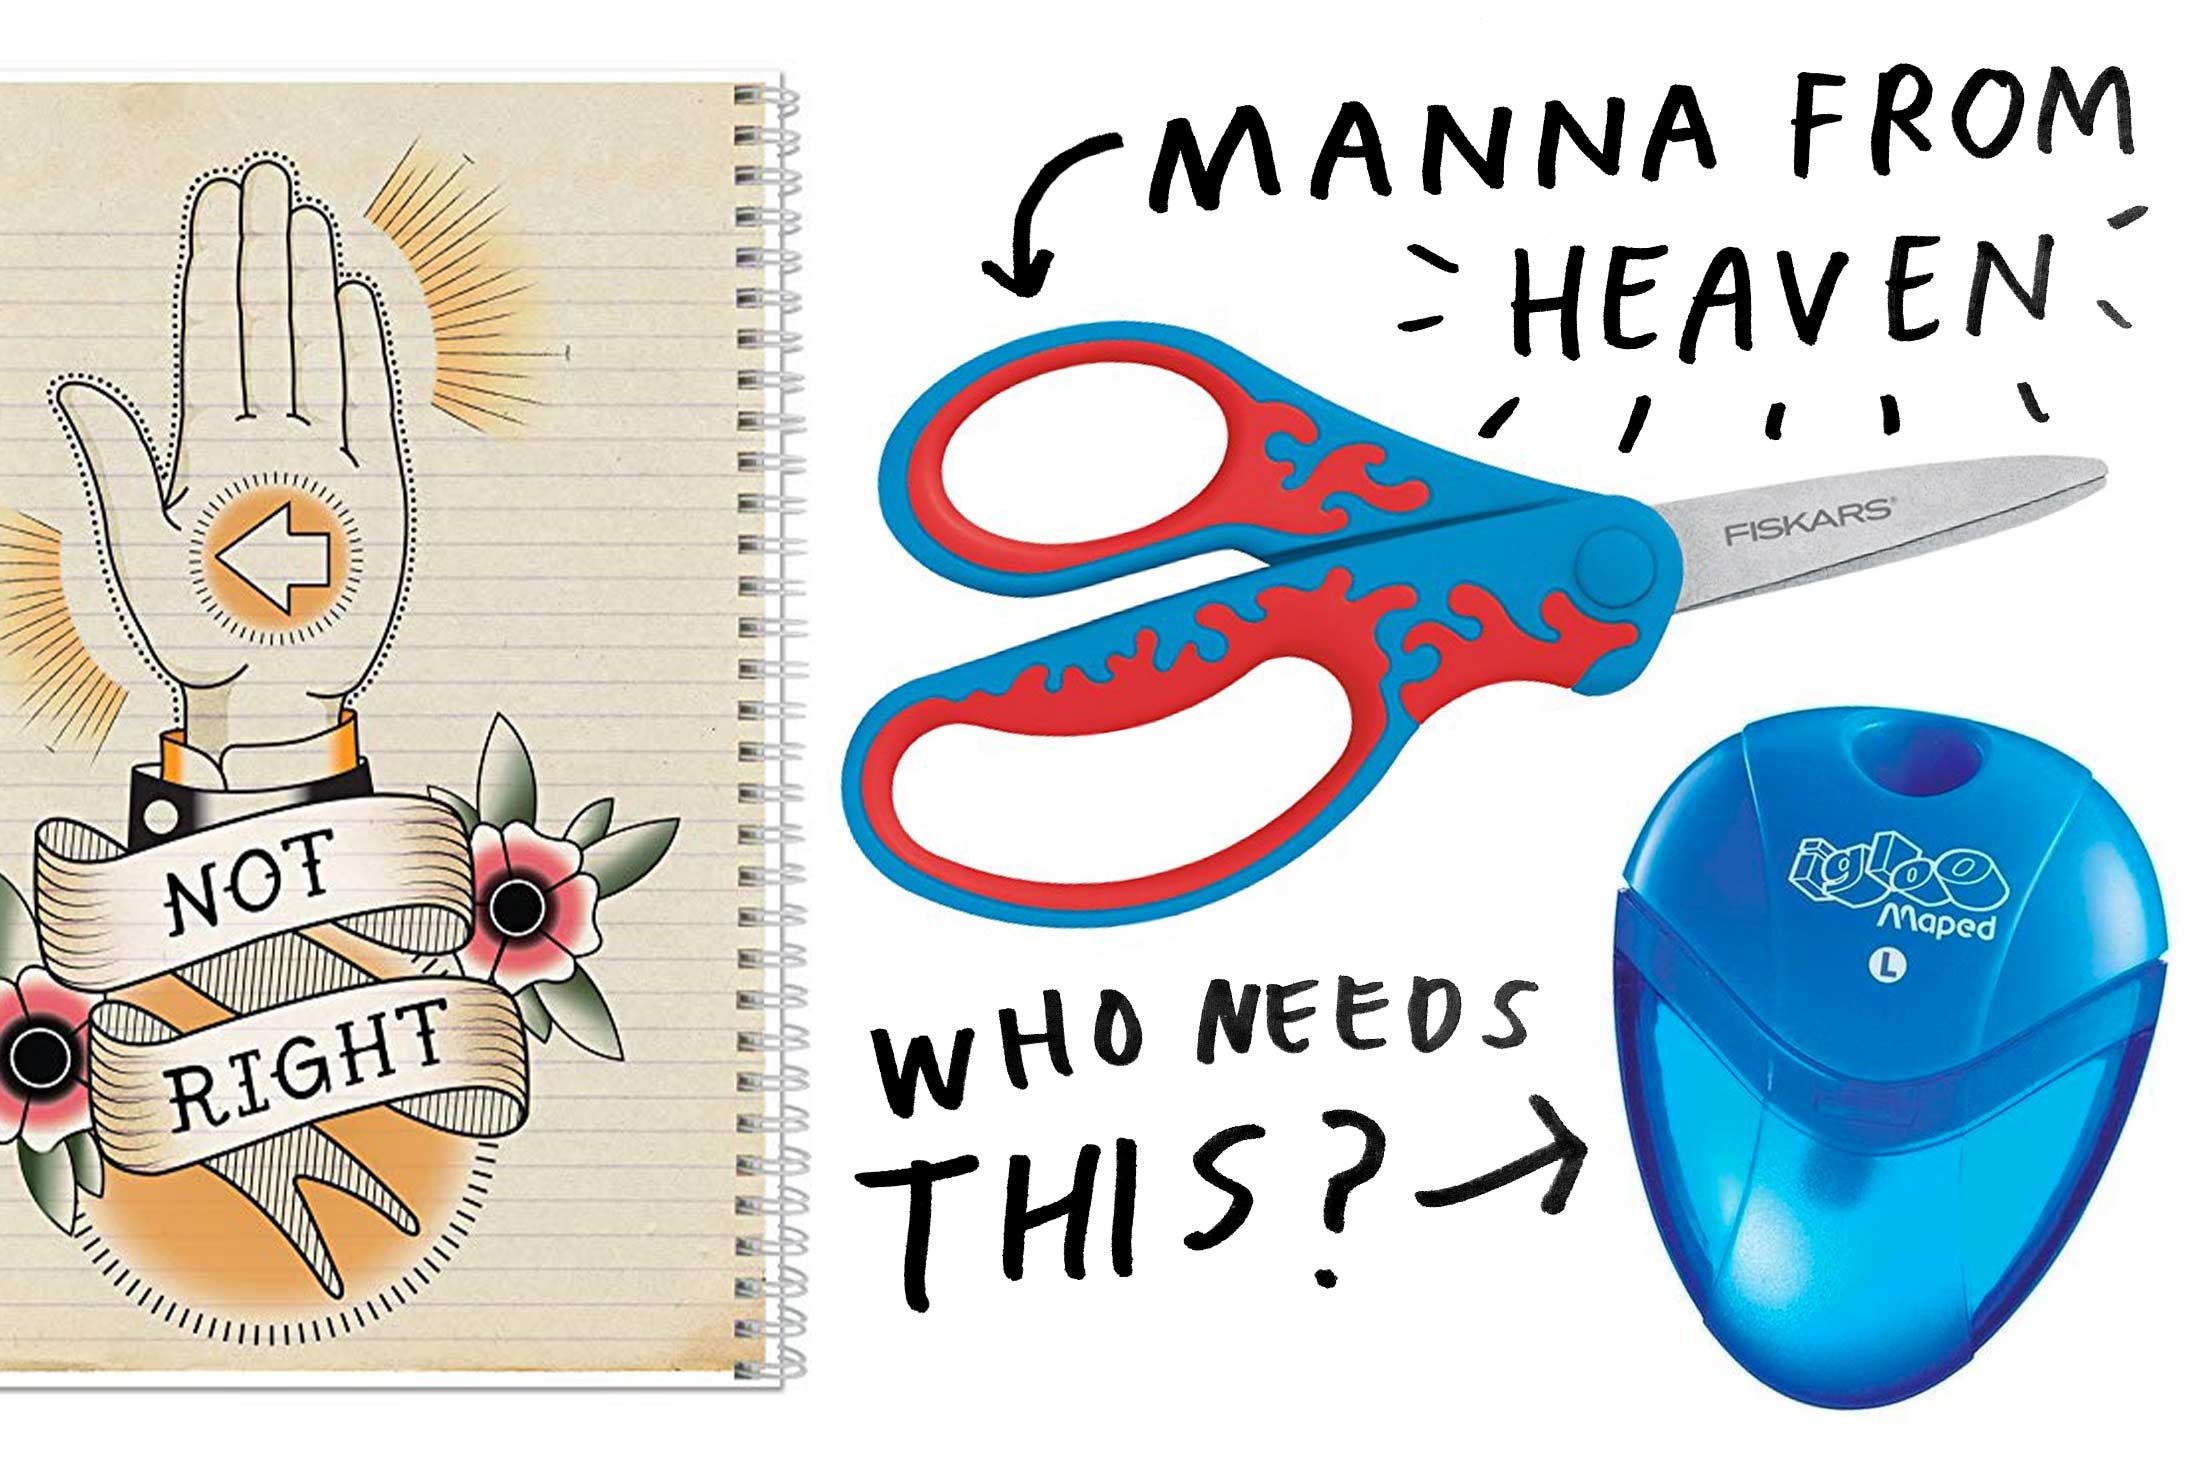 Left hand sharpener? Who needs one?? Left hand scissors? Manna from Heaven!